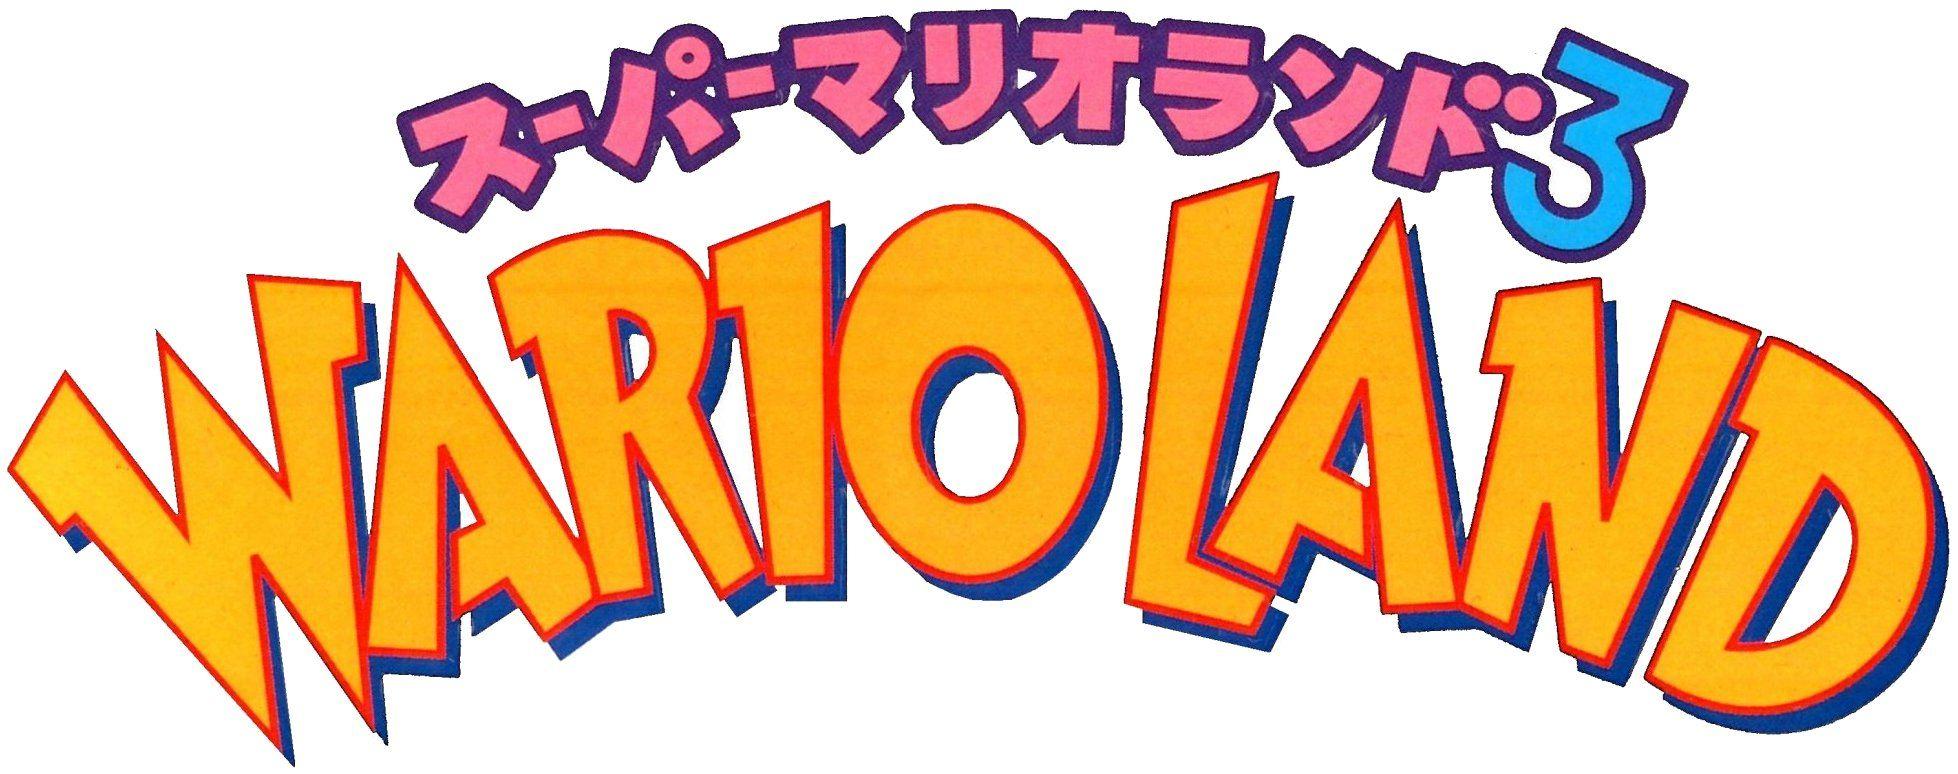 Wario Logo - Image - Wario Land Logo 1.jpg | Logopedia | FANDOM powered by Wikia